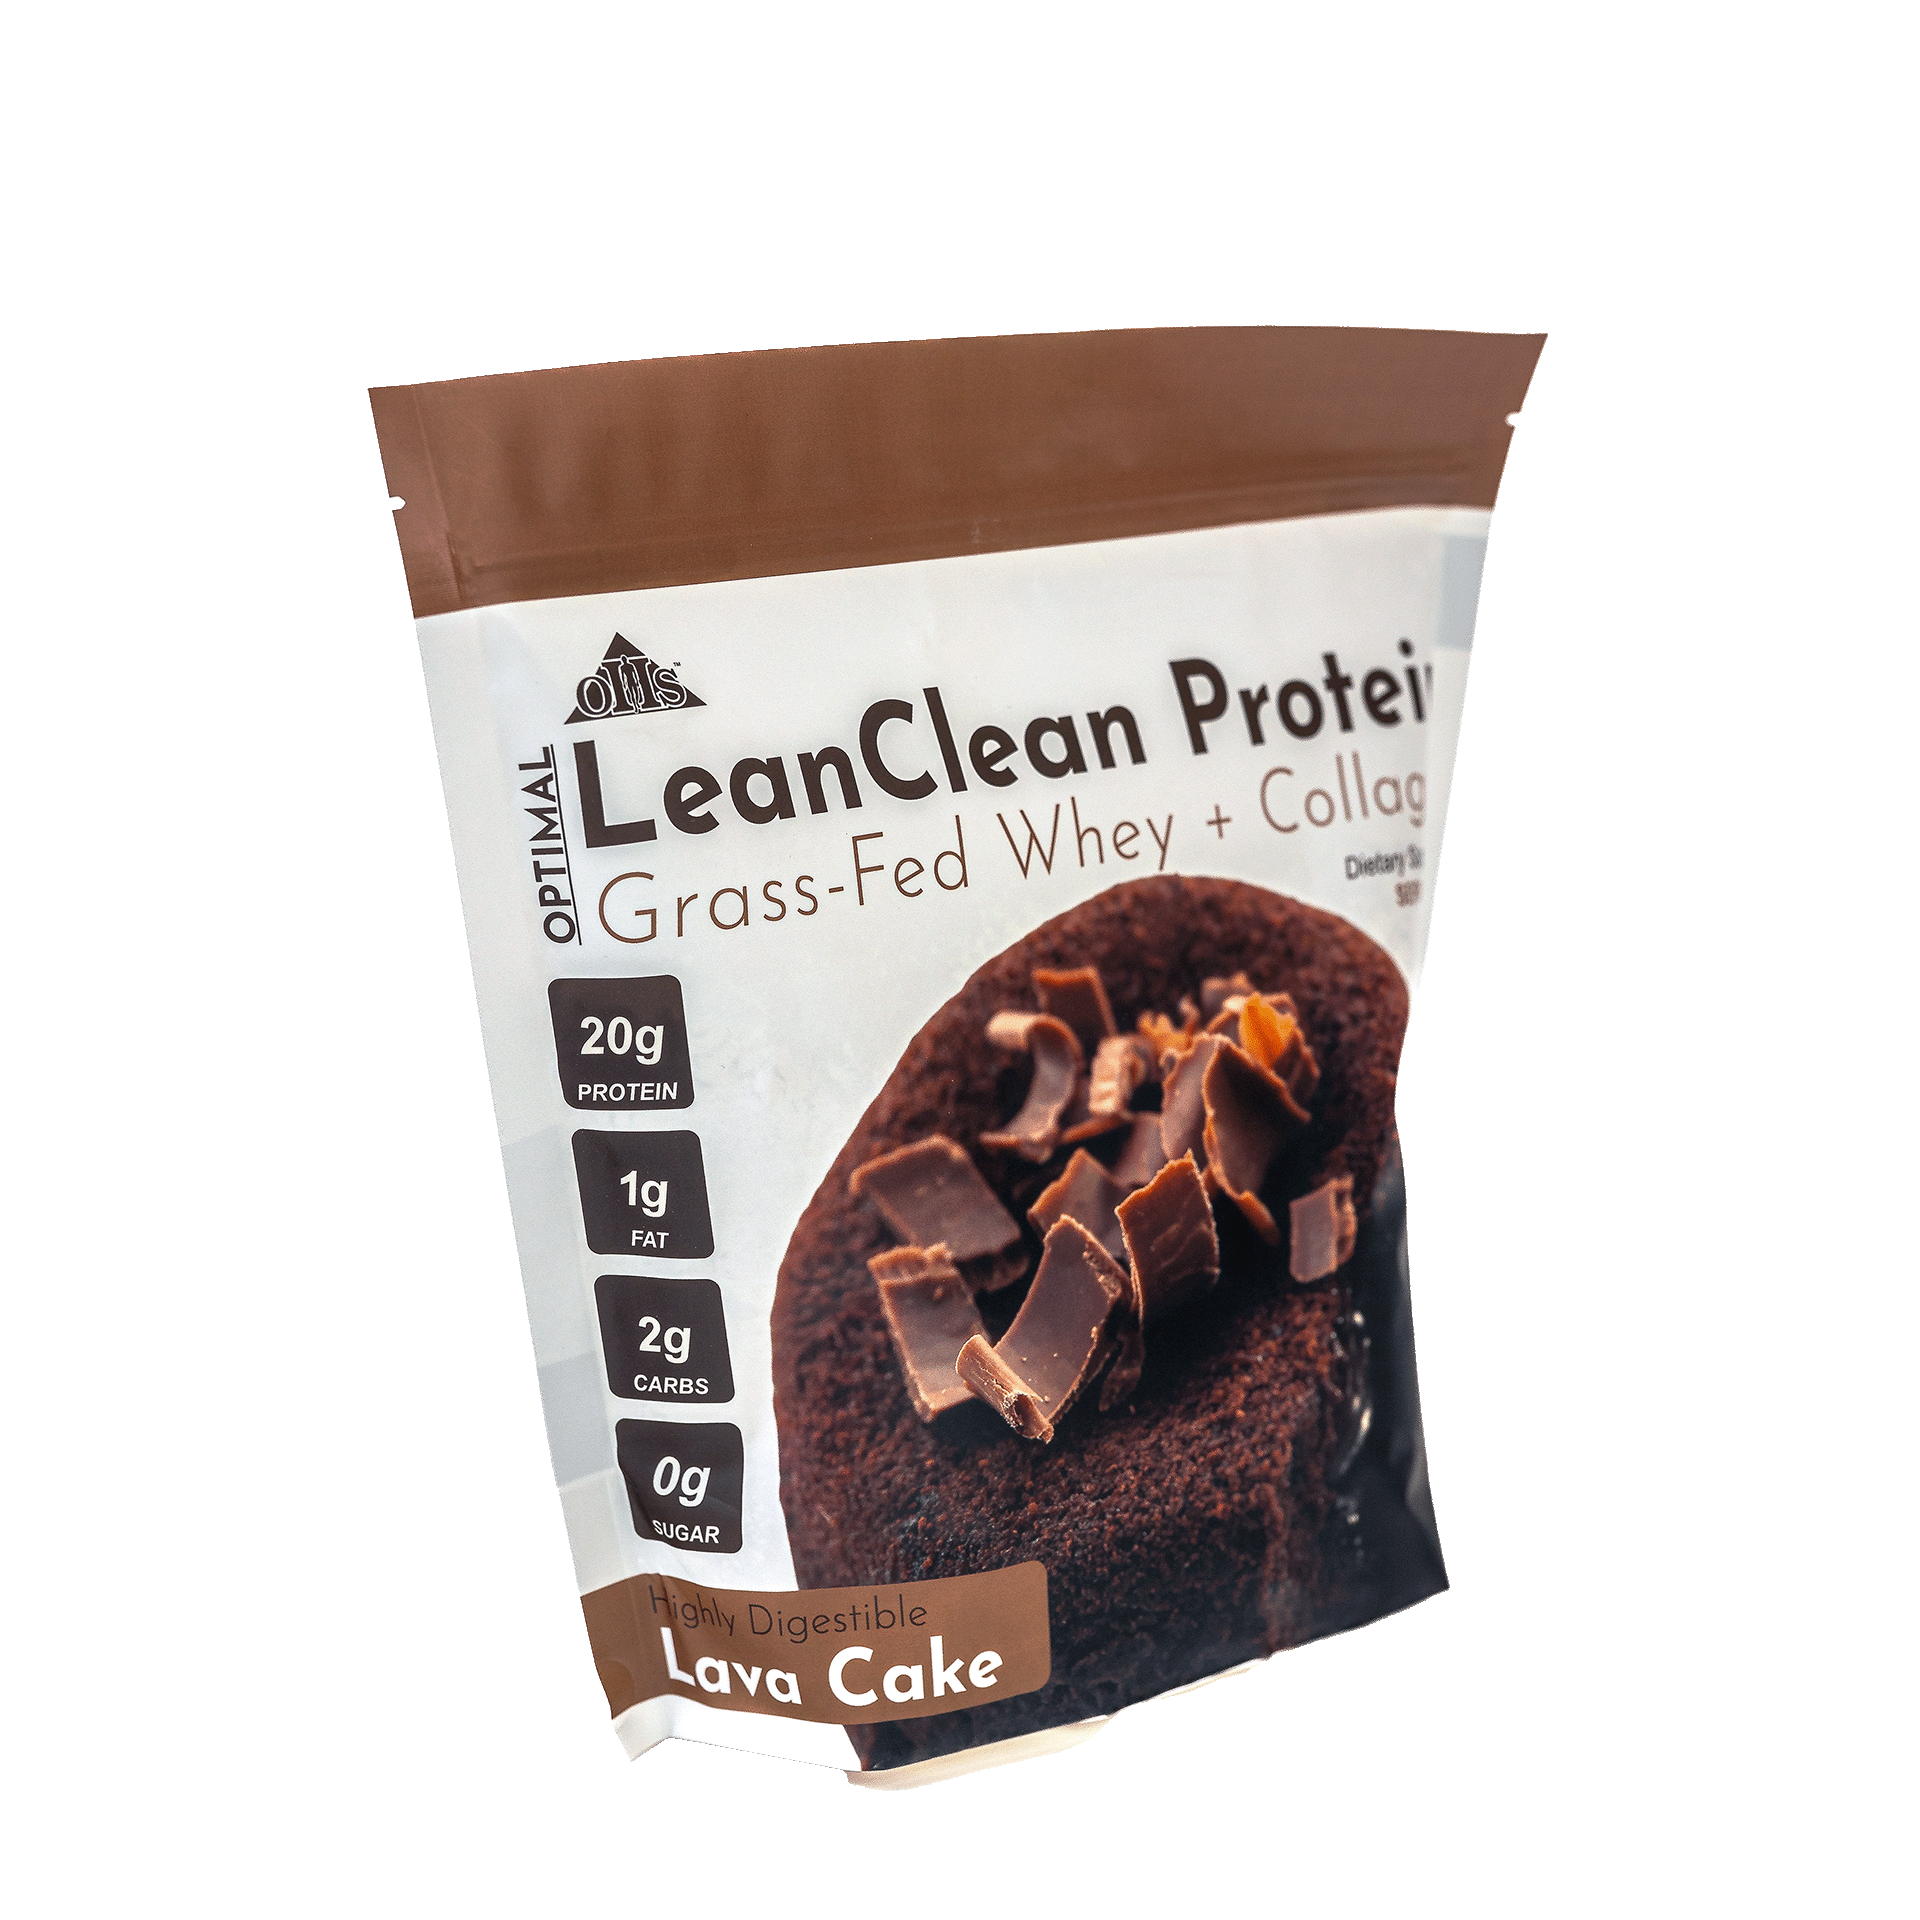 Image of Optimal Lean Clean Protein Lava cake bag.